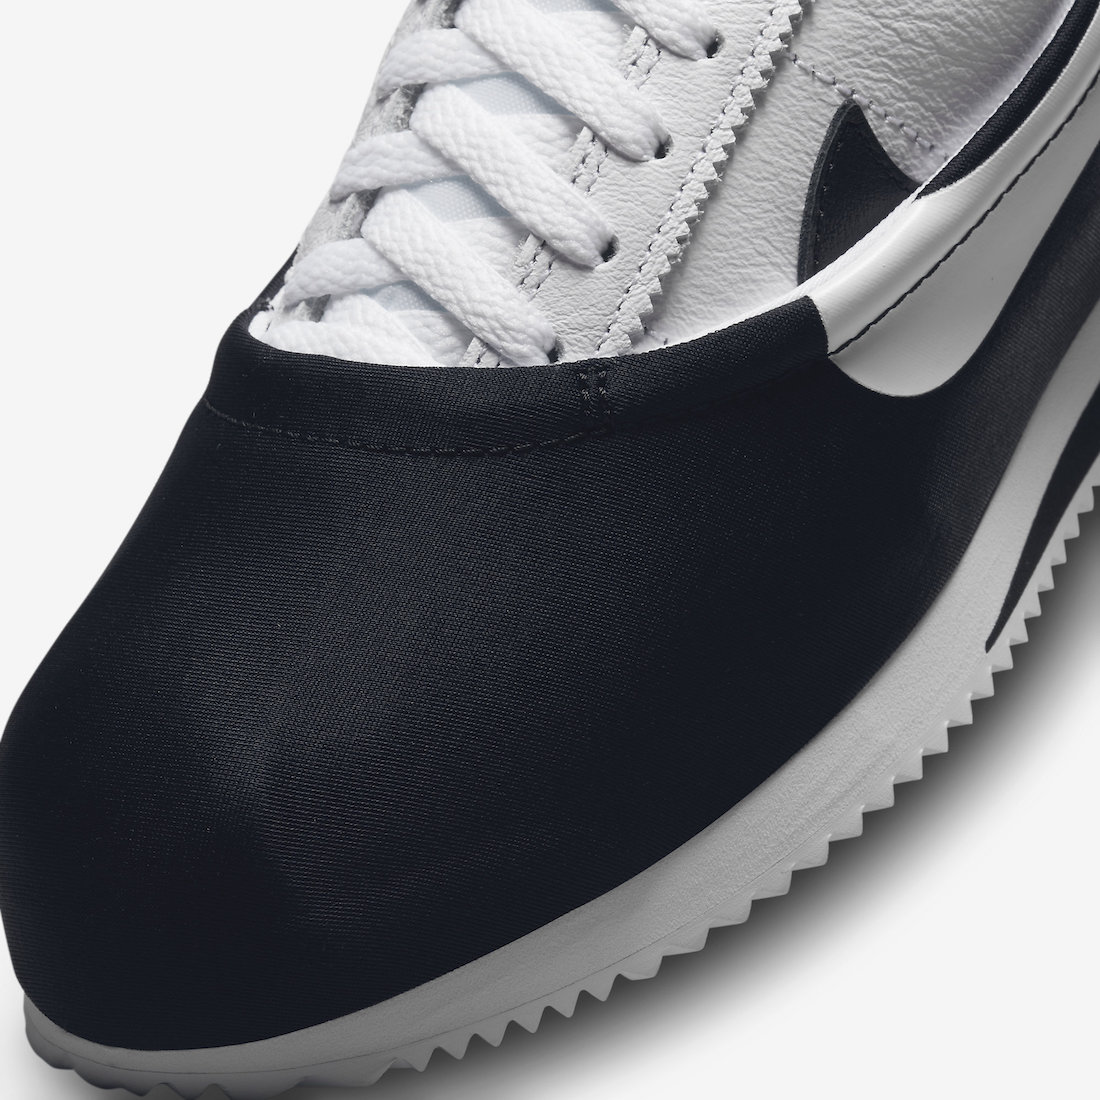 CLOT Nike Cortez Clotez Black White DZ3239-002 Release Date